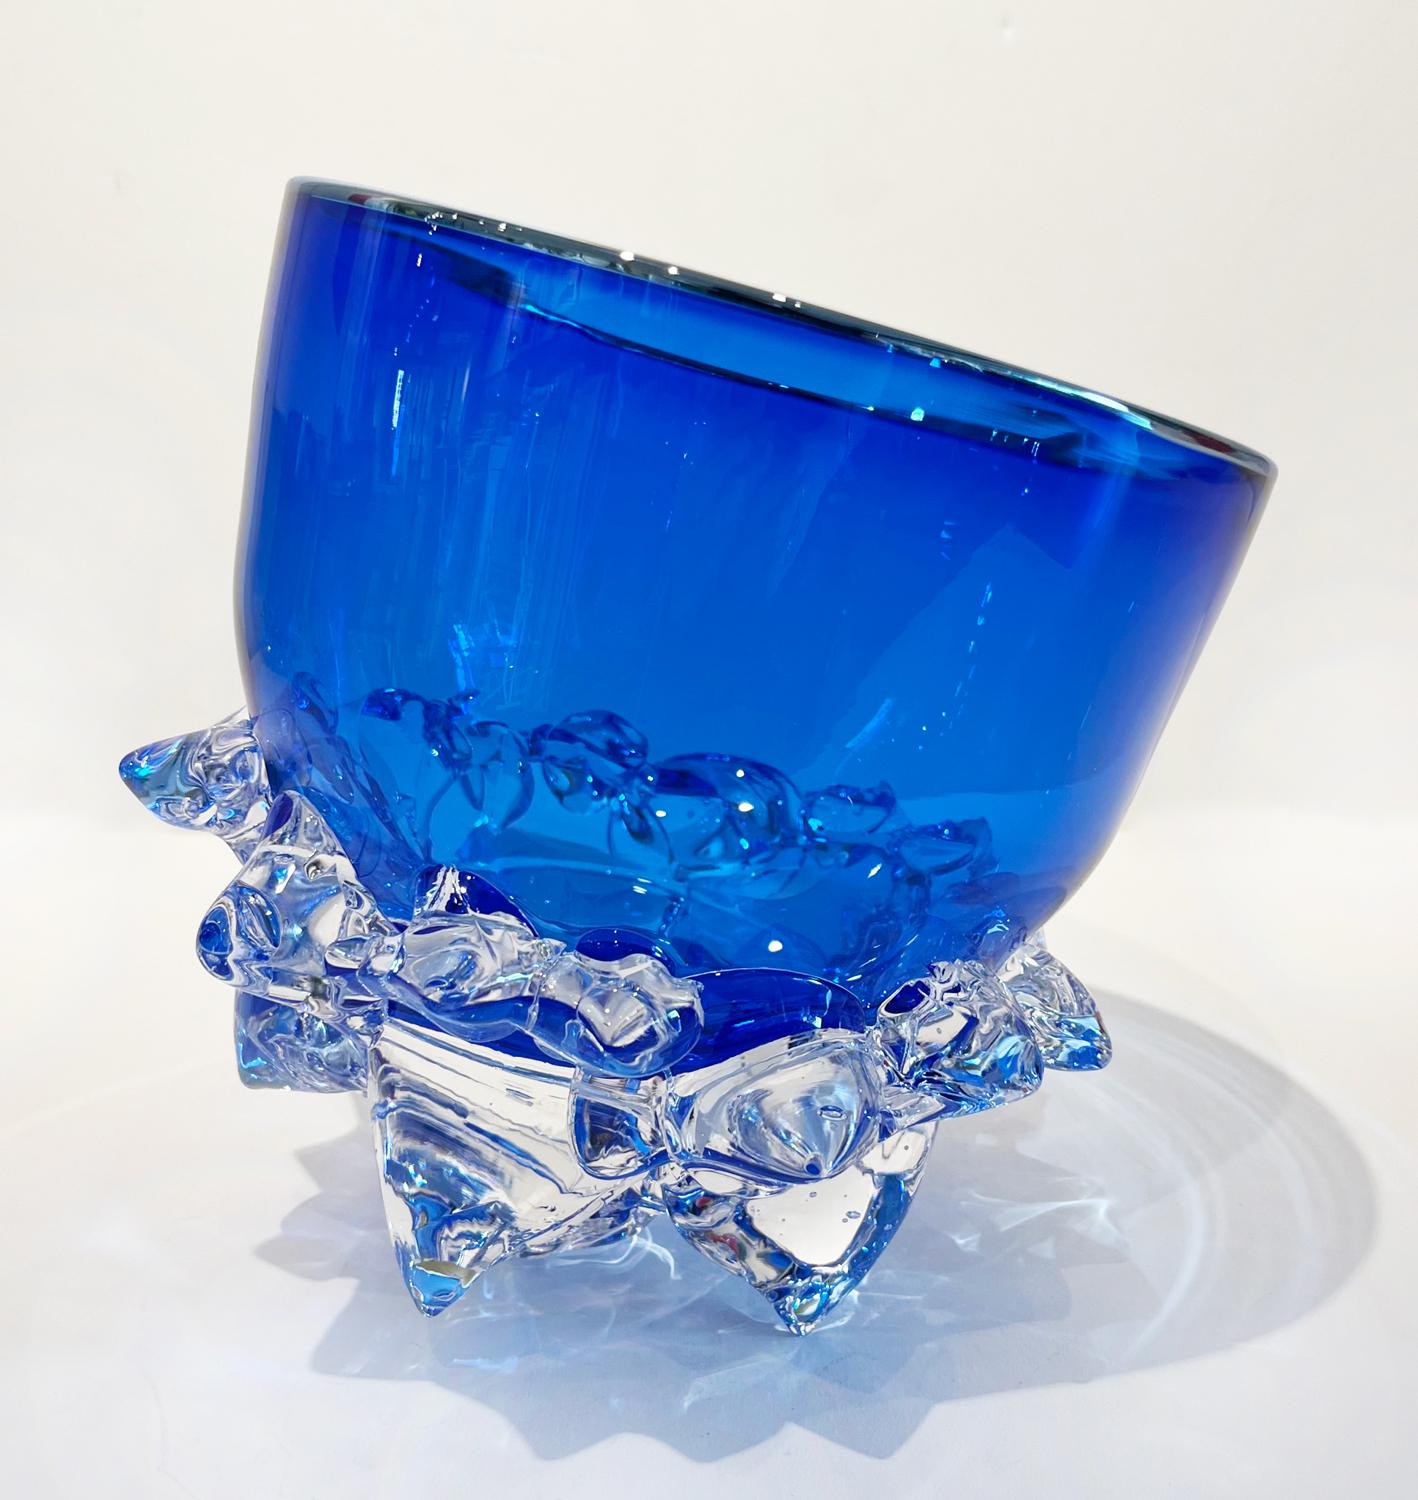 7" Glass Thorn Vessel, Cobalt blue, art glass bowl - Art by Andrew Madvin